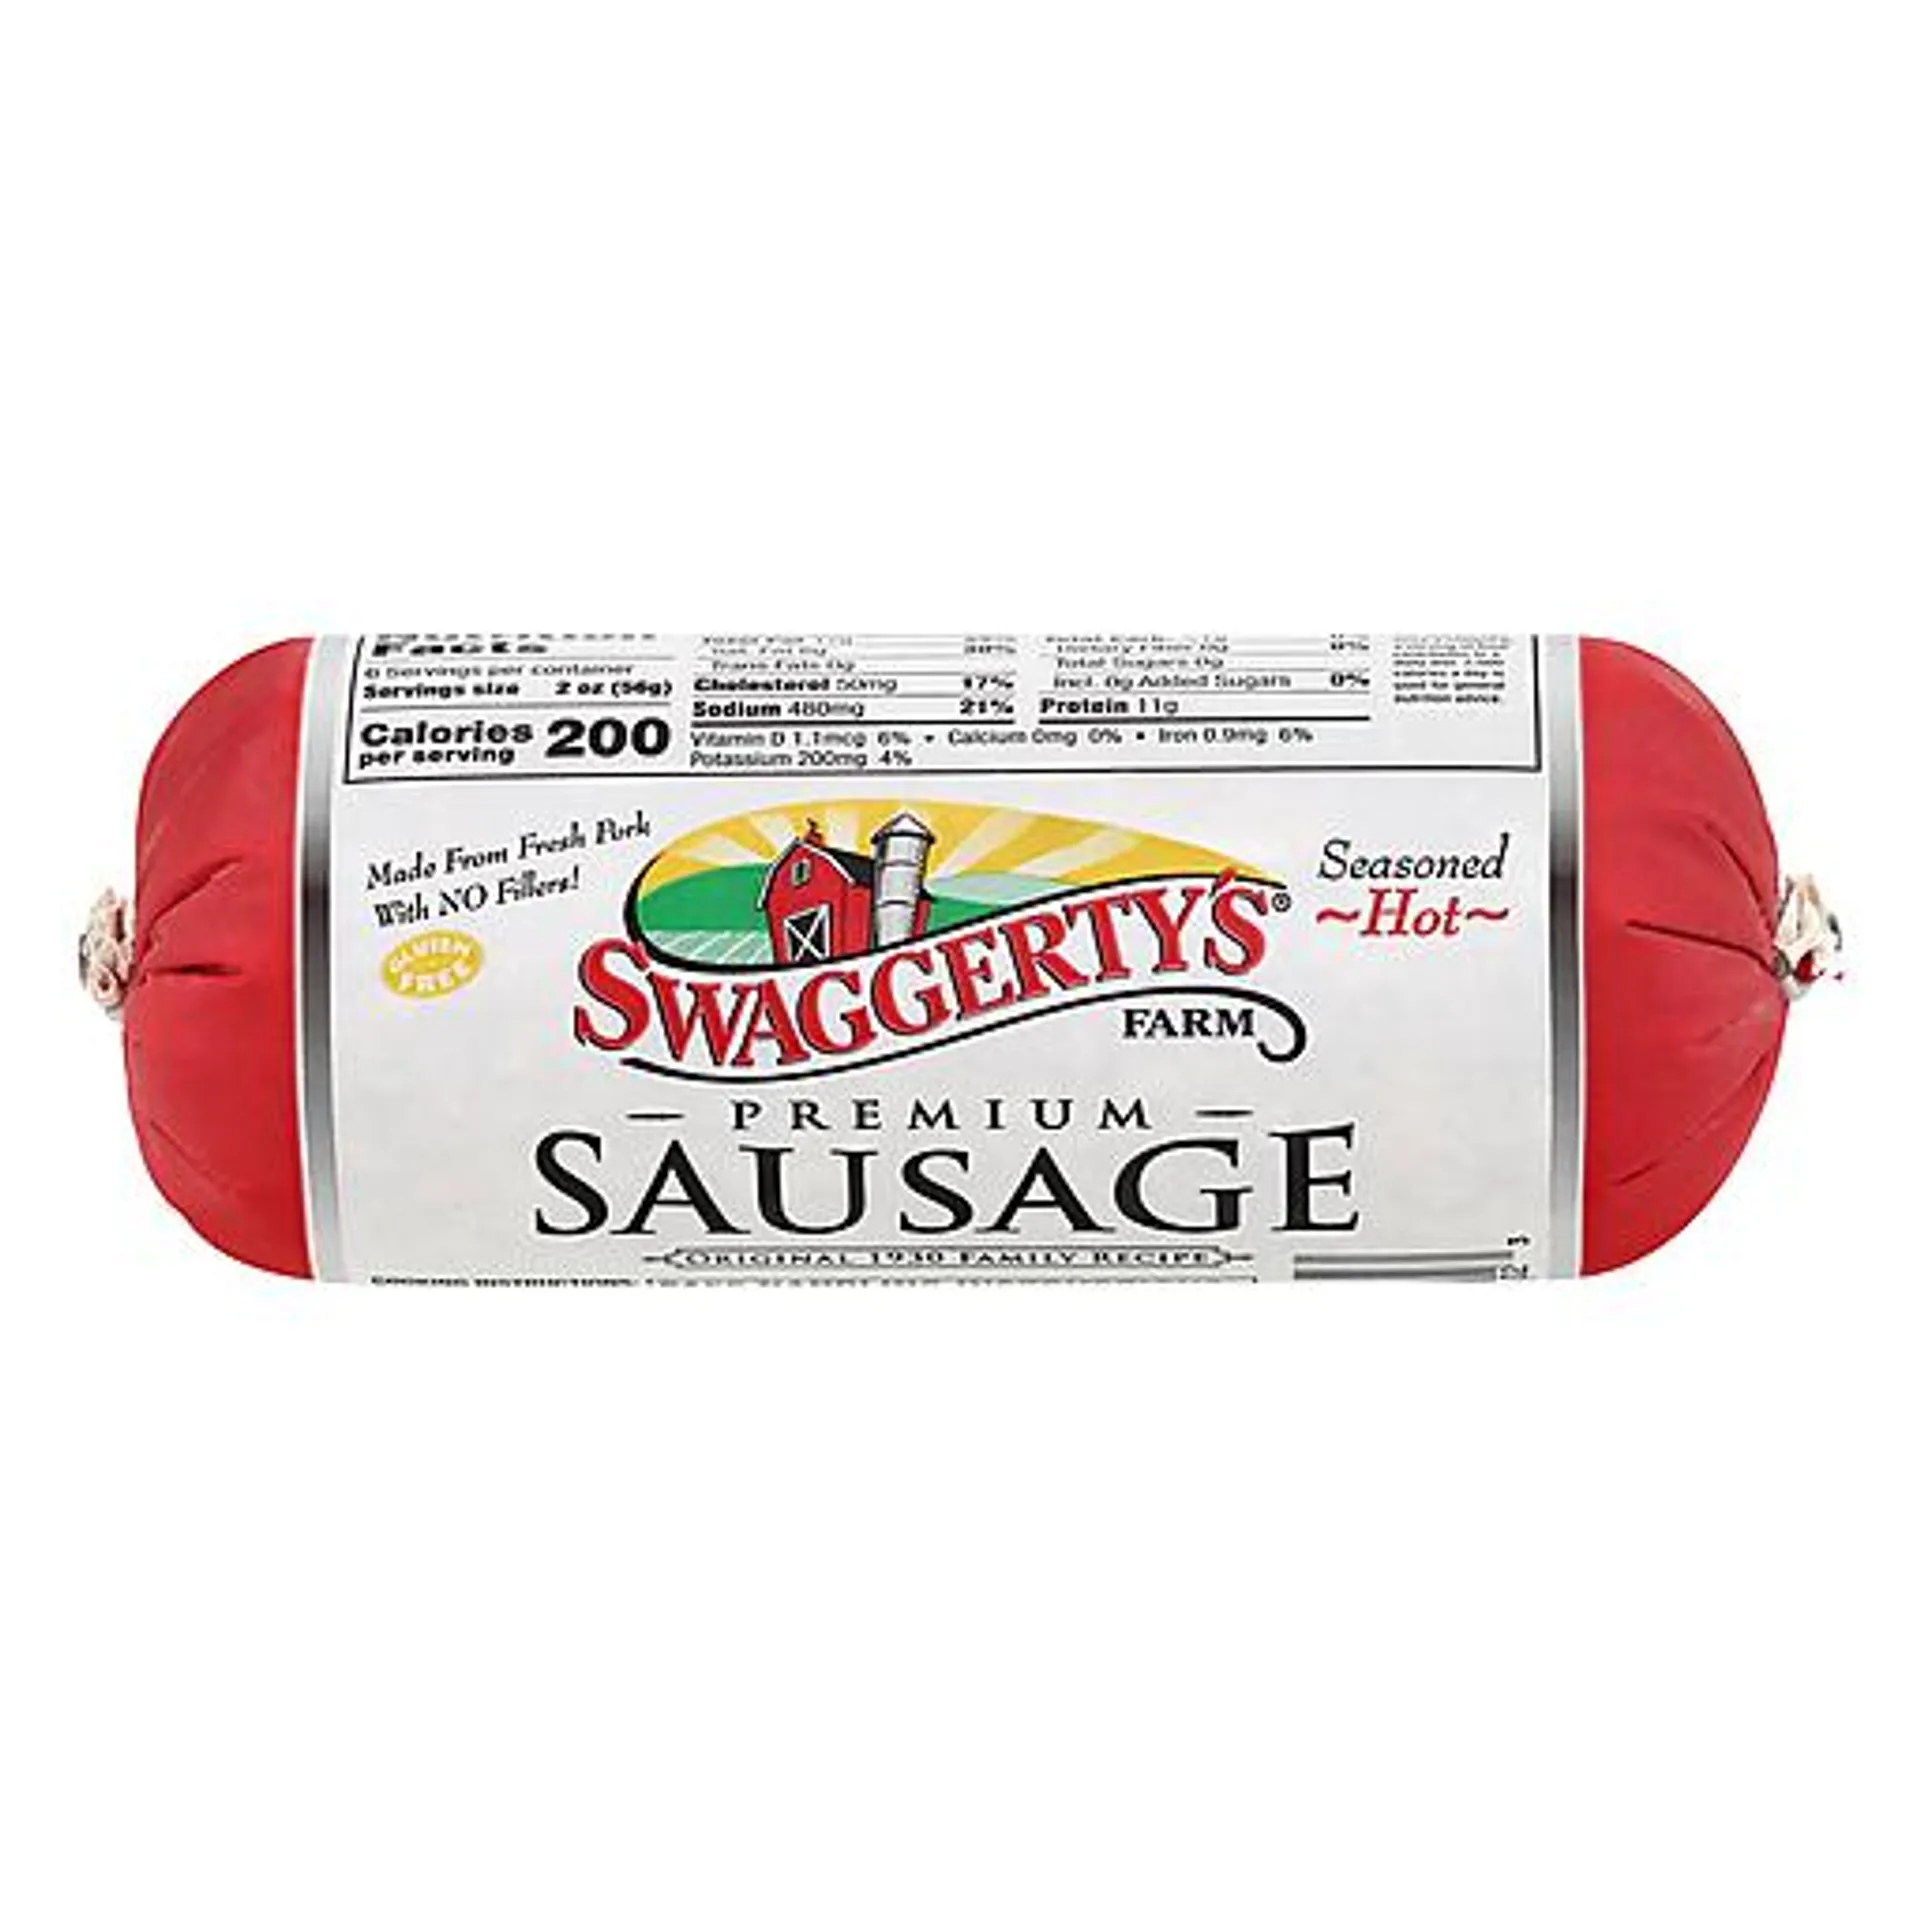 Swaggerty's Farm Hot Seasoned Premium Sausage 16 Oz